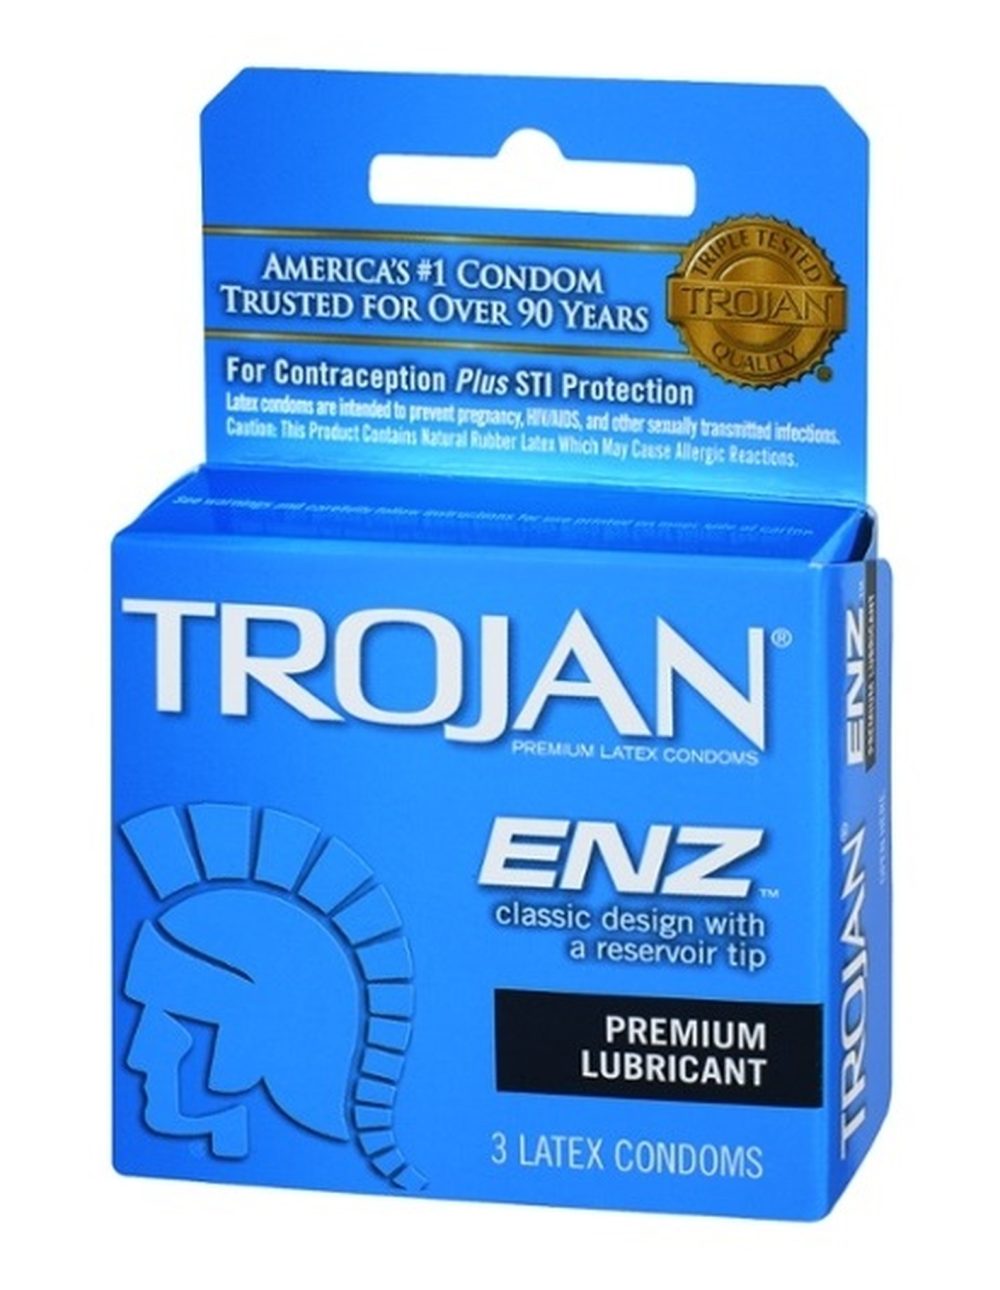 Trojan ENZ Premium Lubricant (6/3 pack)